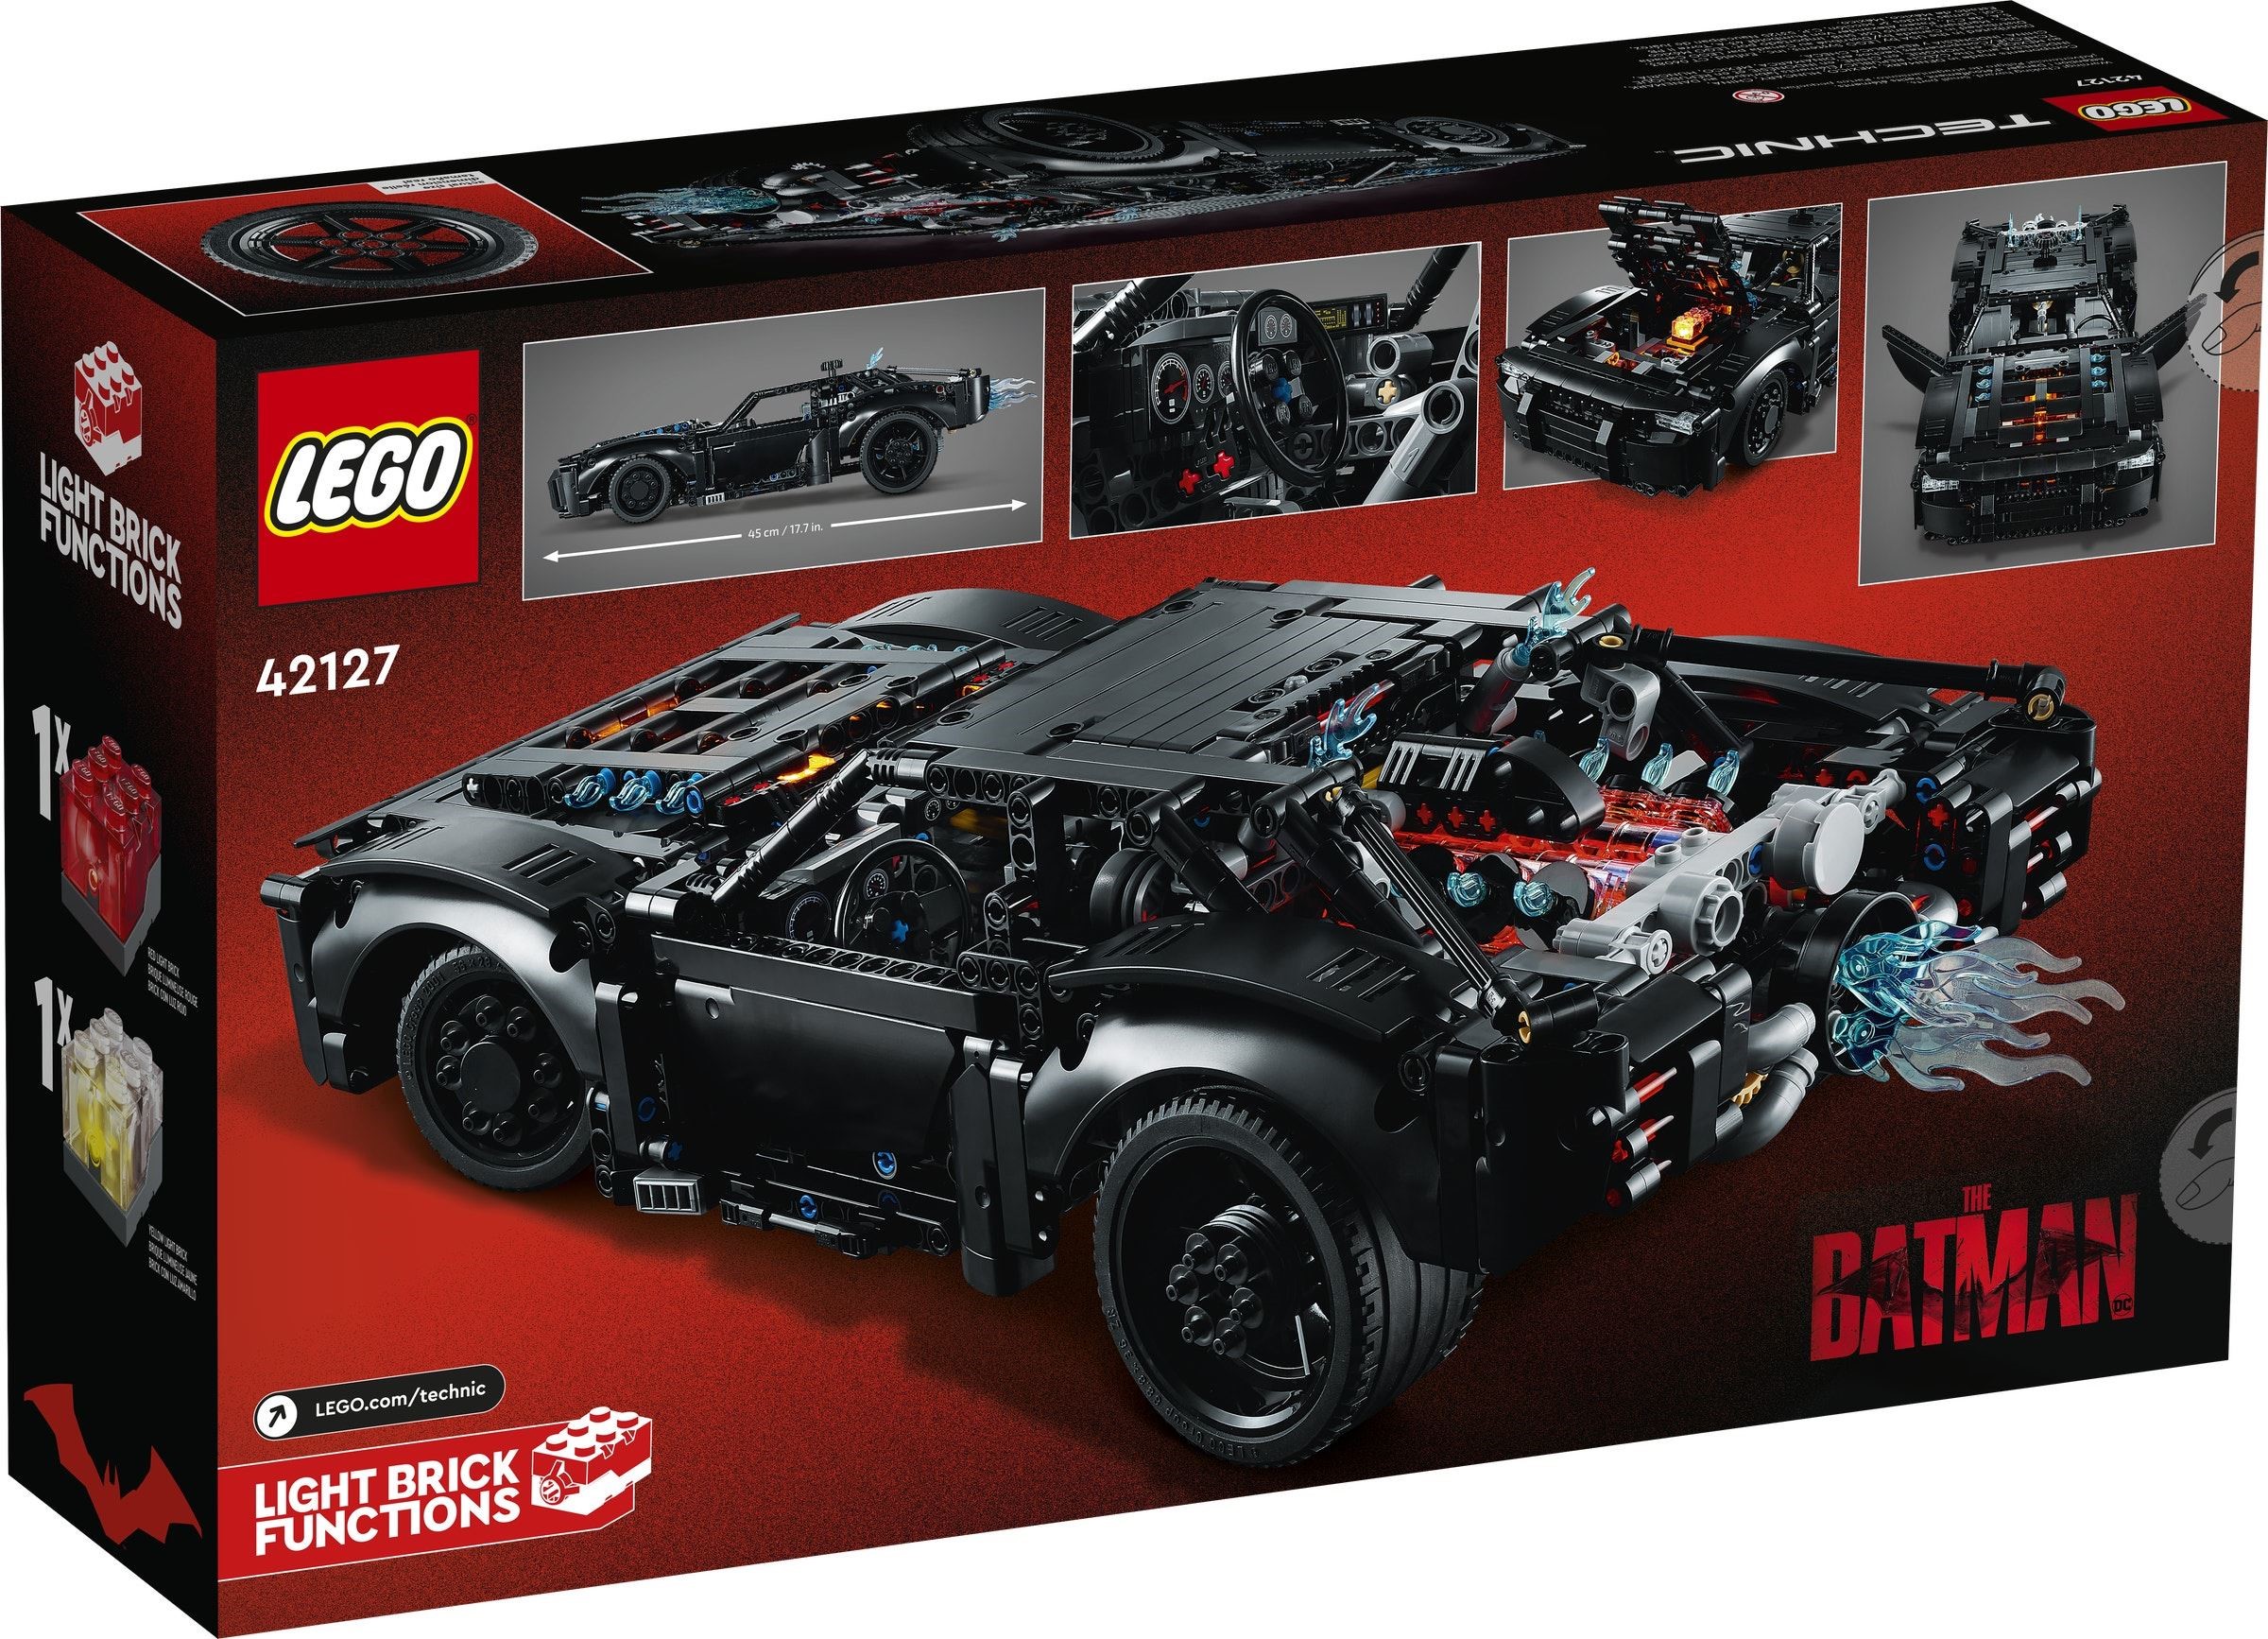 Upcoming The Batman movie LEGO sets revealed, including Technic